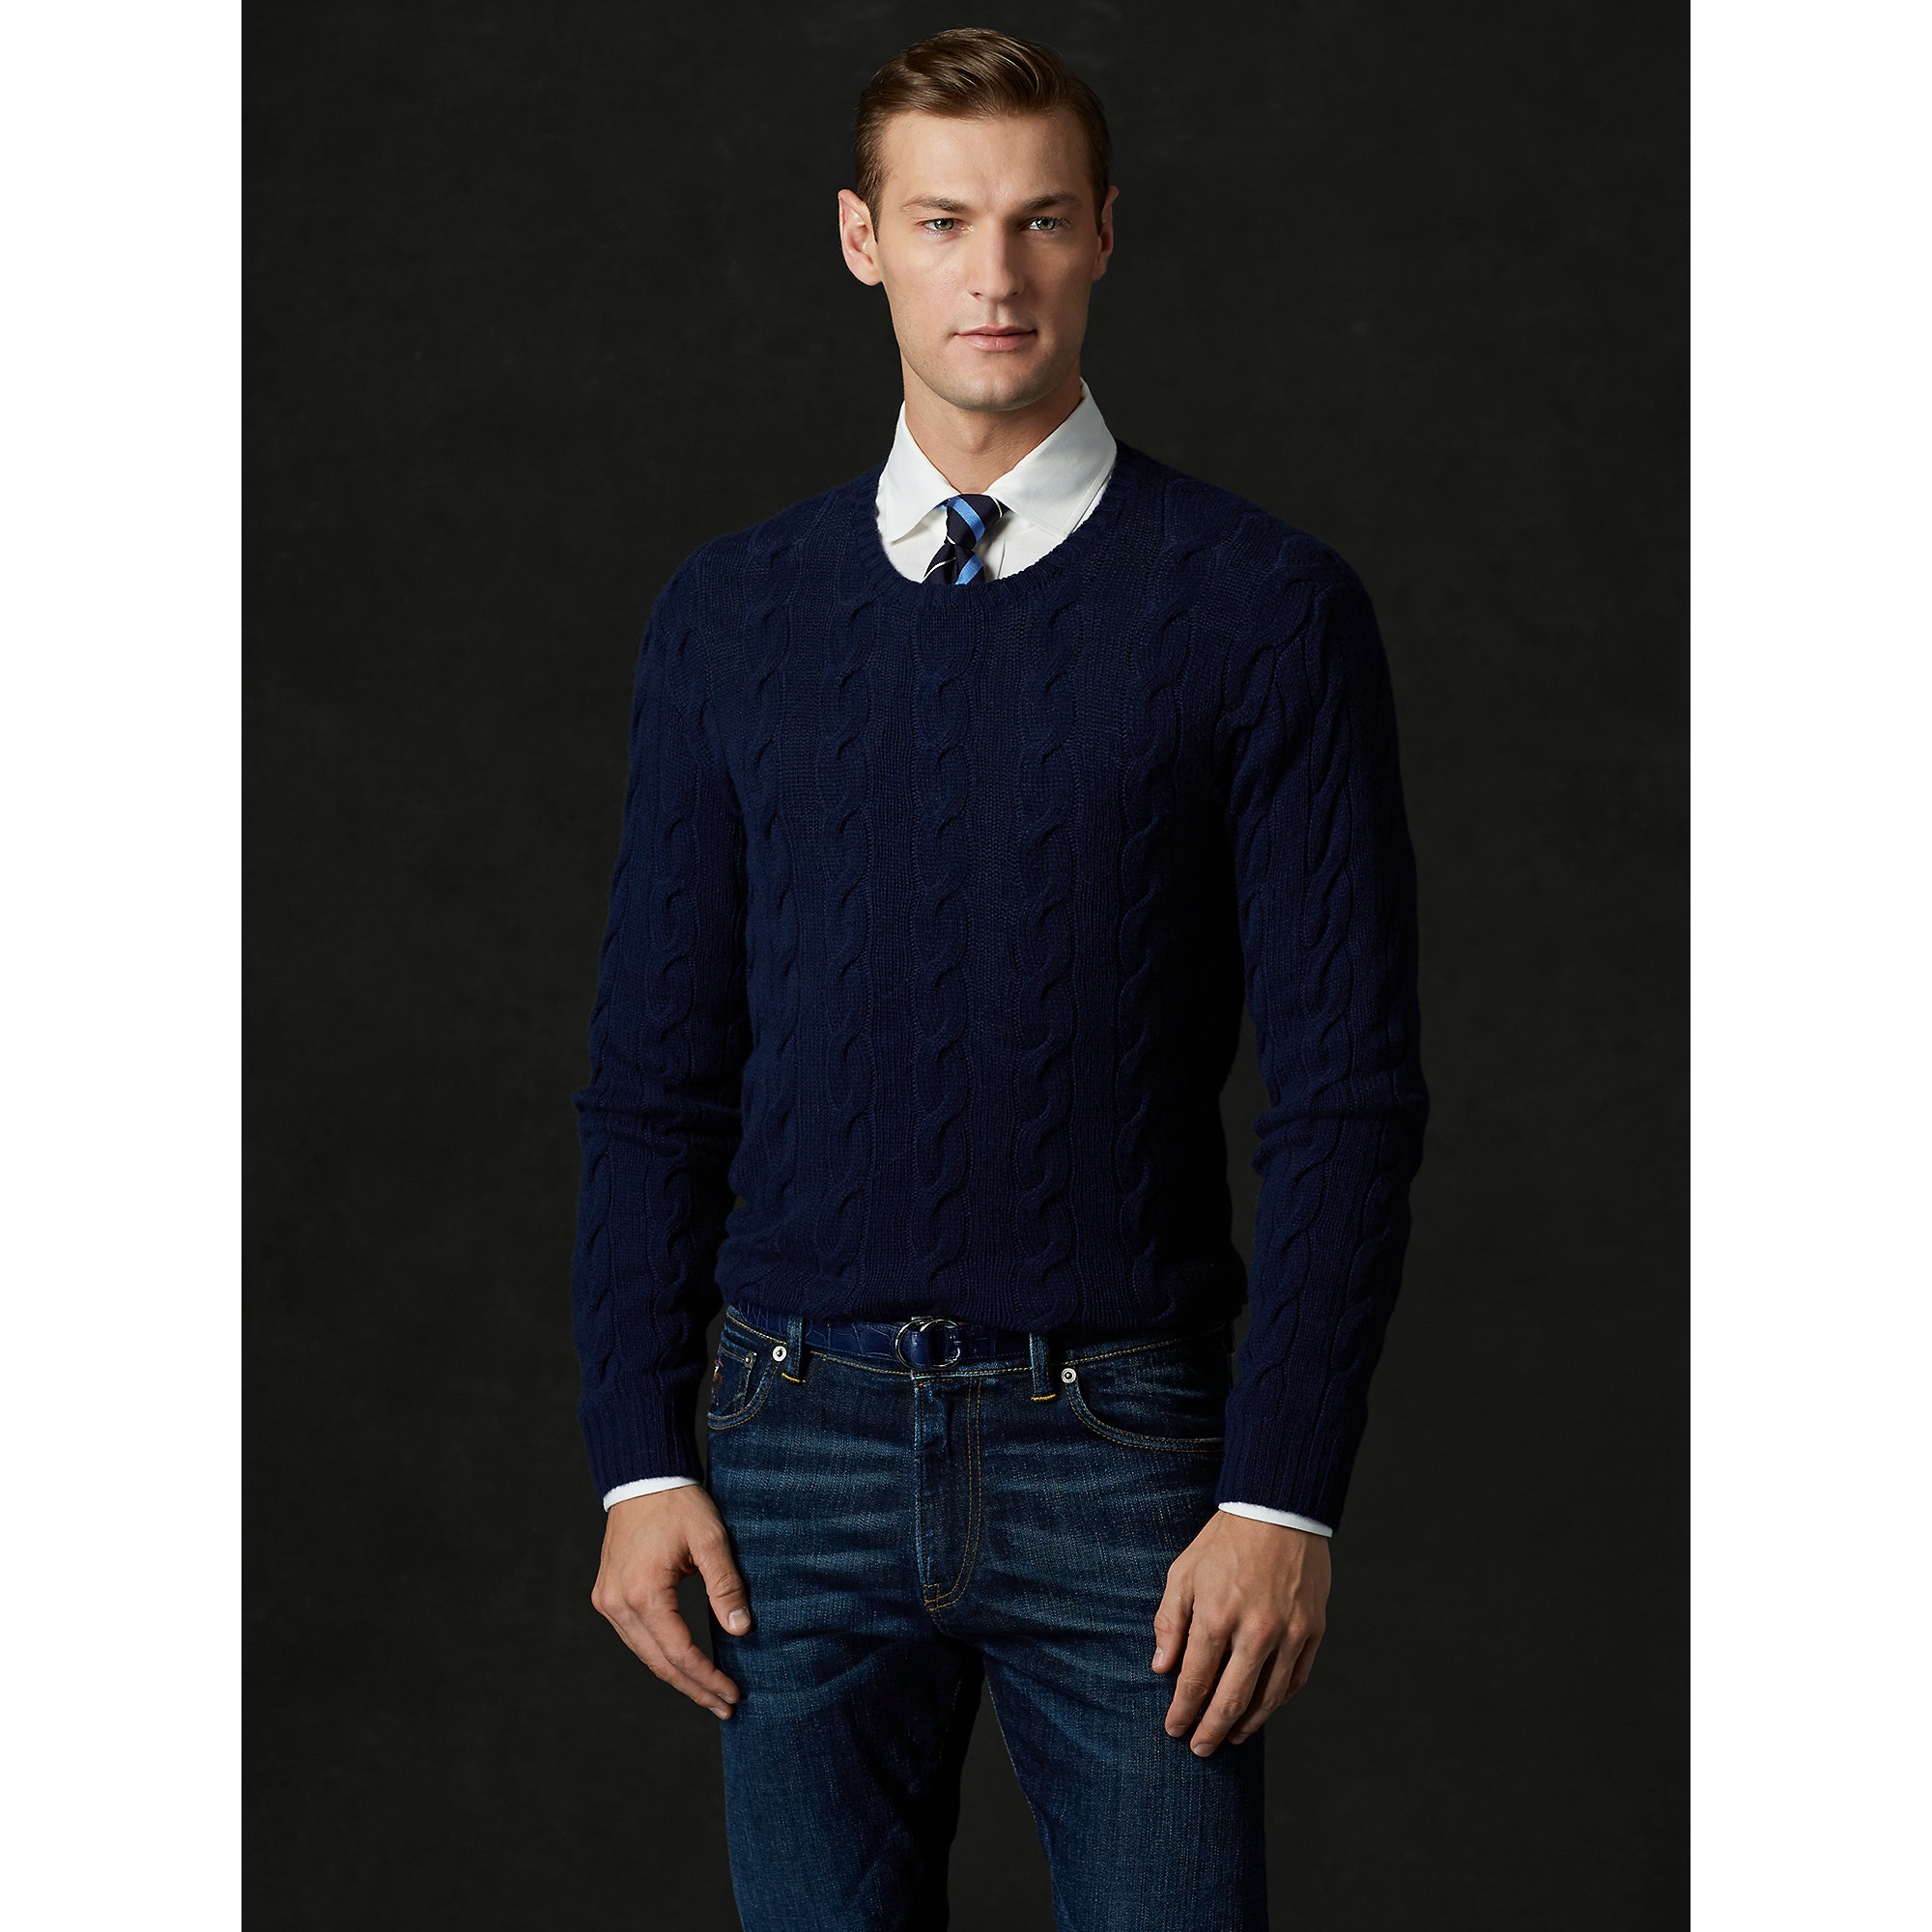 Ralph lauren purple label Cable-knit Cashmere Sweater in Blue for Men ...